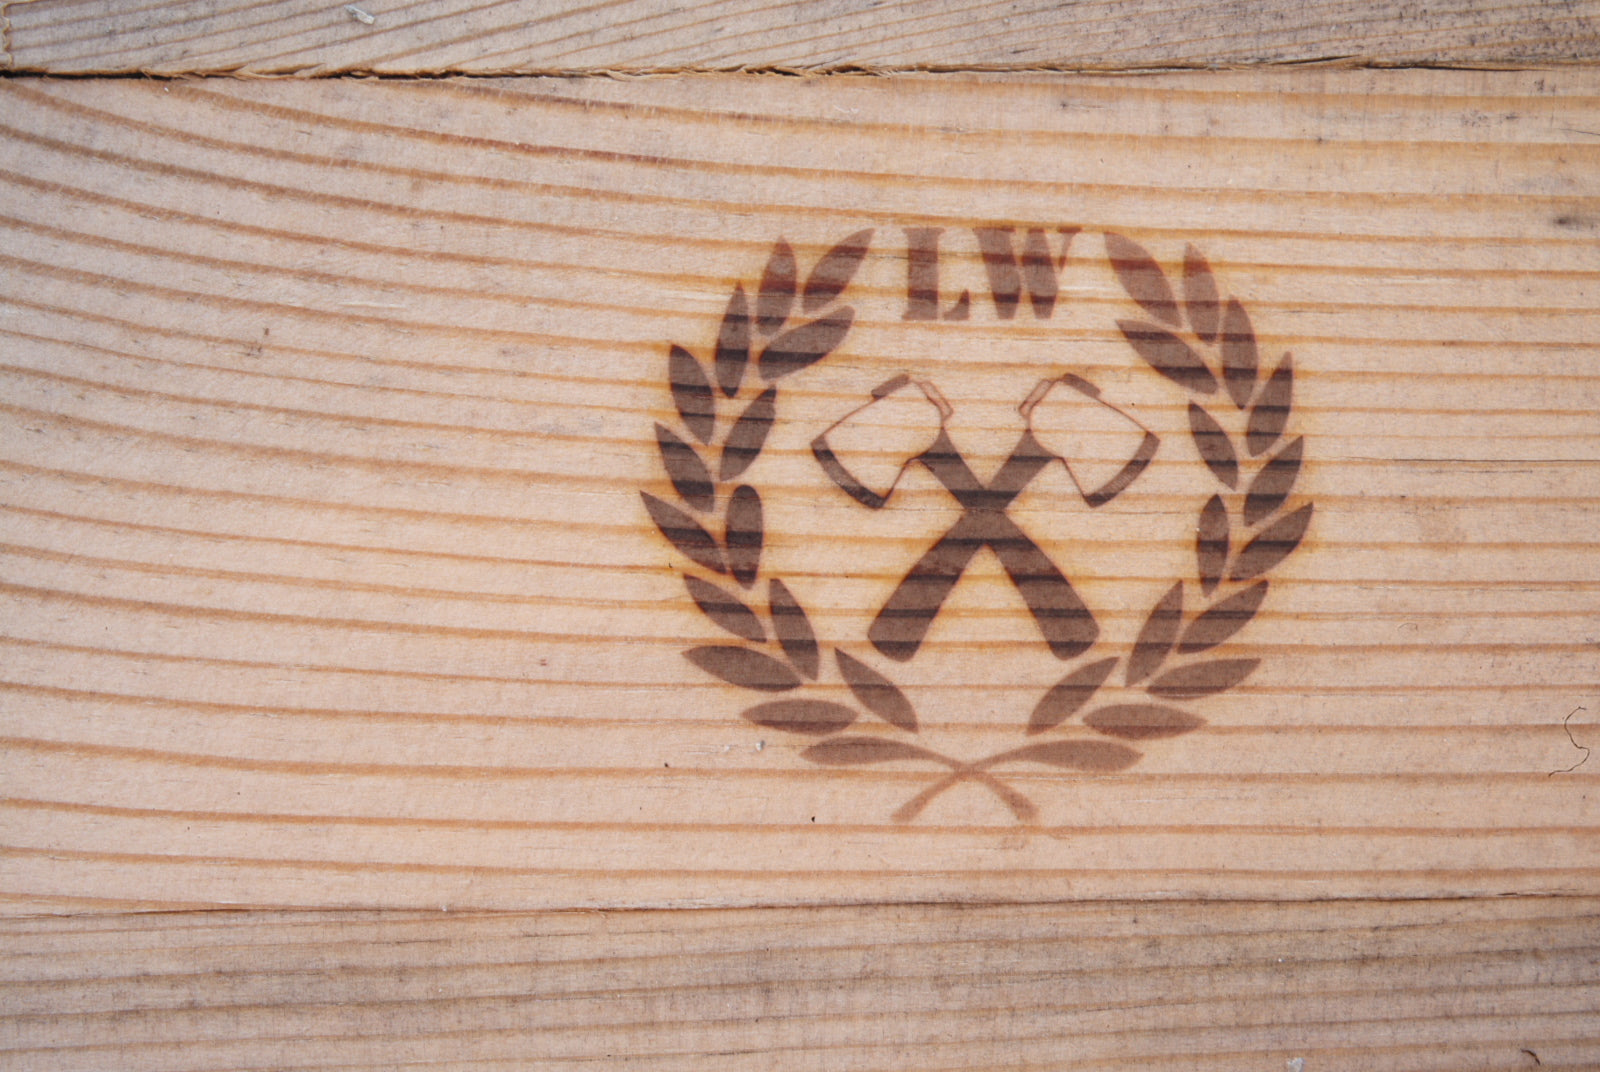 Custom Wood Branding Iron / Wedding Branding Iron for Wood / Custom Metal  Stamp Heat Emboss Stamp / Logo Branding Iron for Wood, Meat, Food 